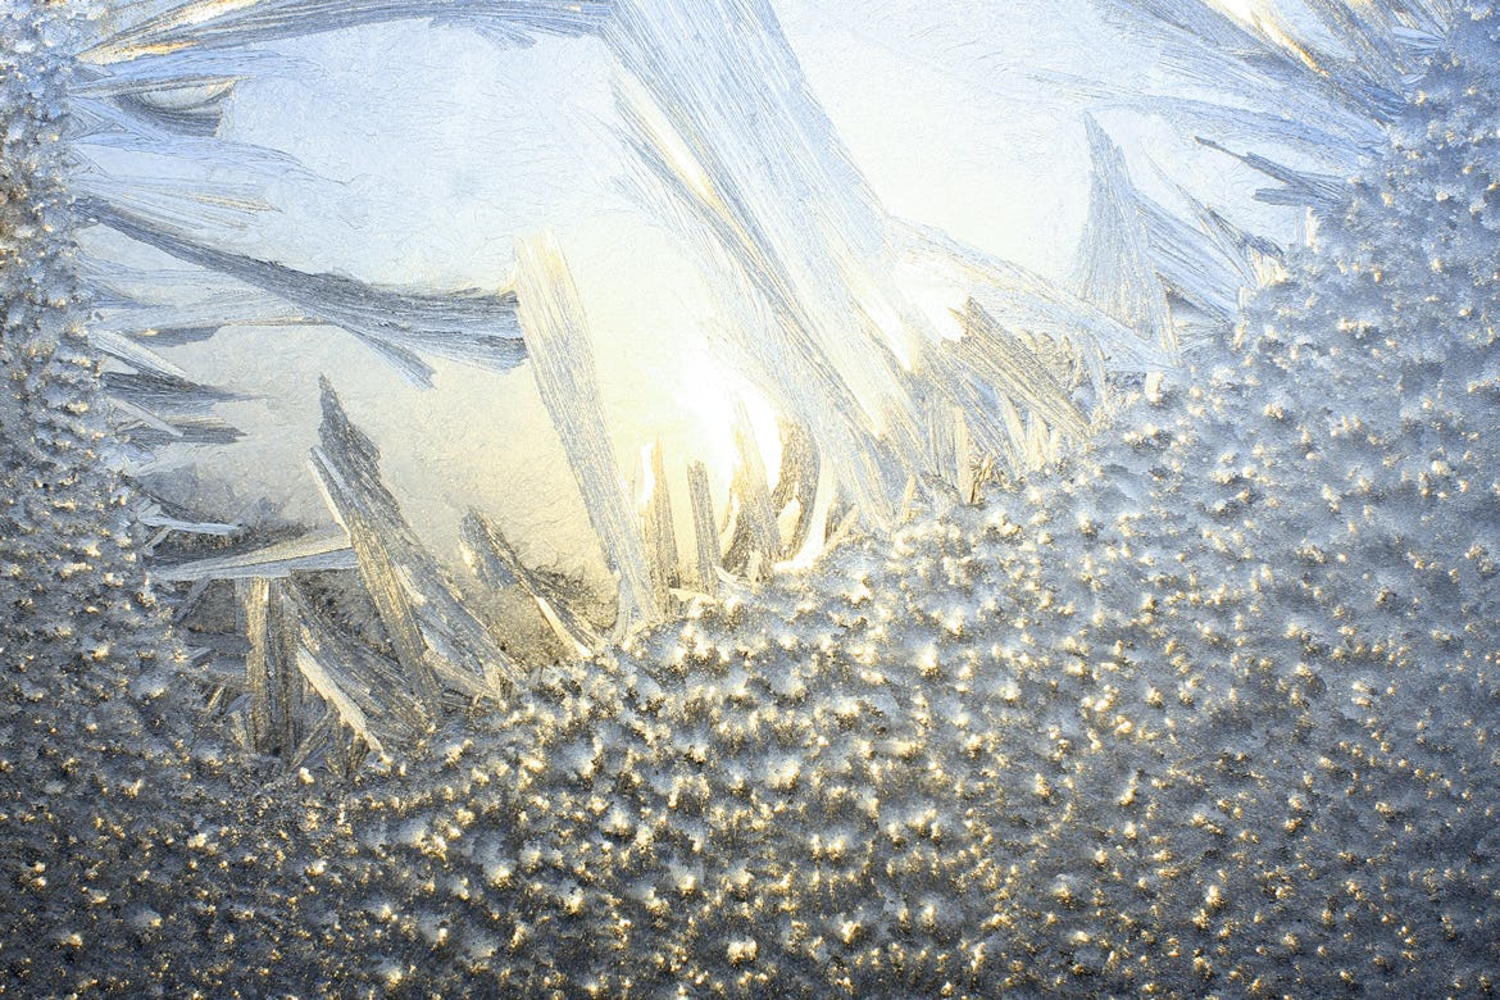 3045 15款冬季冰霜高清背景素材 Art of Frost – Winter Ice Backgrounds